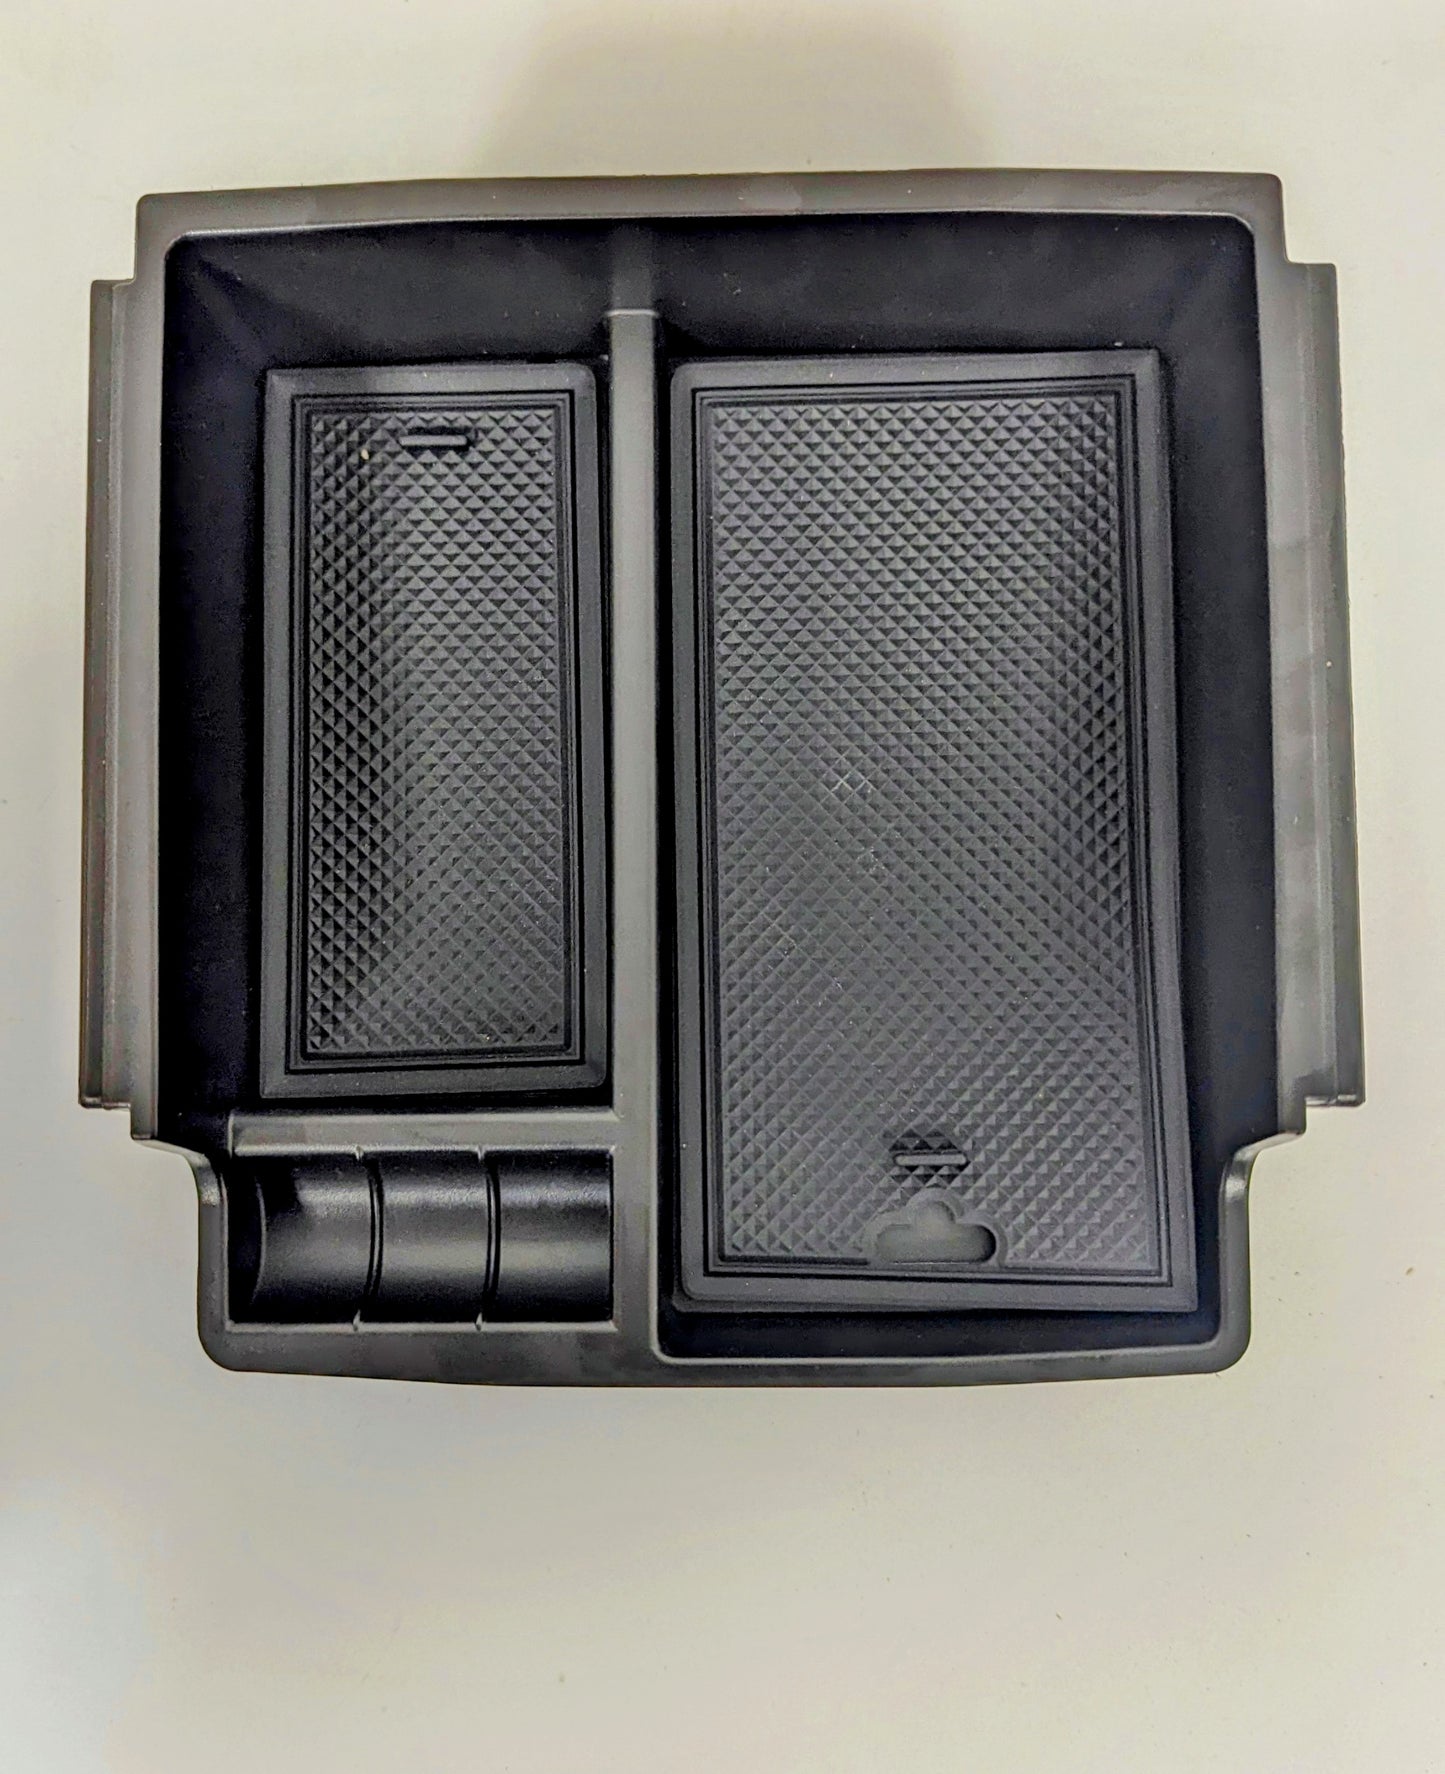 Center Console Armrest Box For 2021-2023 Ford Bronco Storage Box Organizer Tray